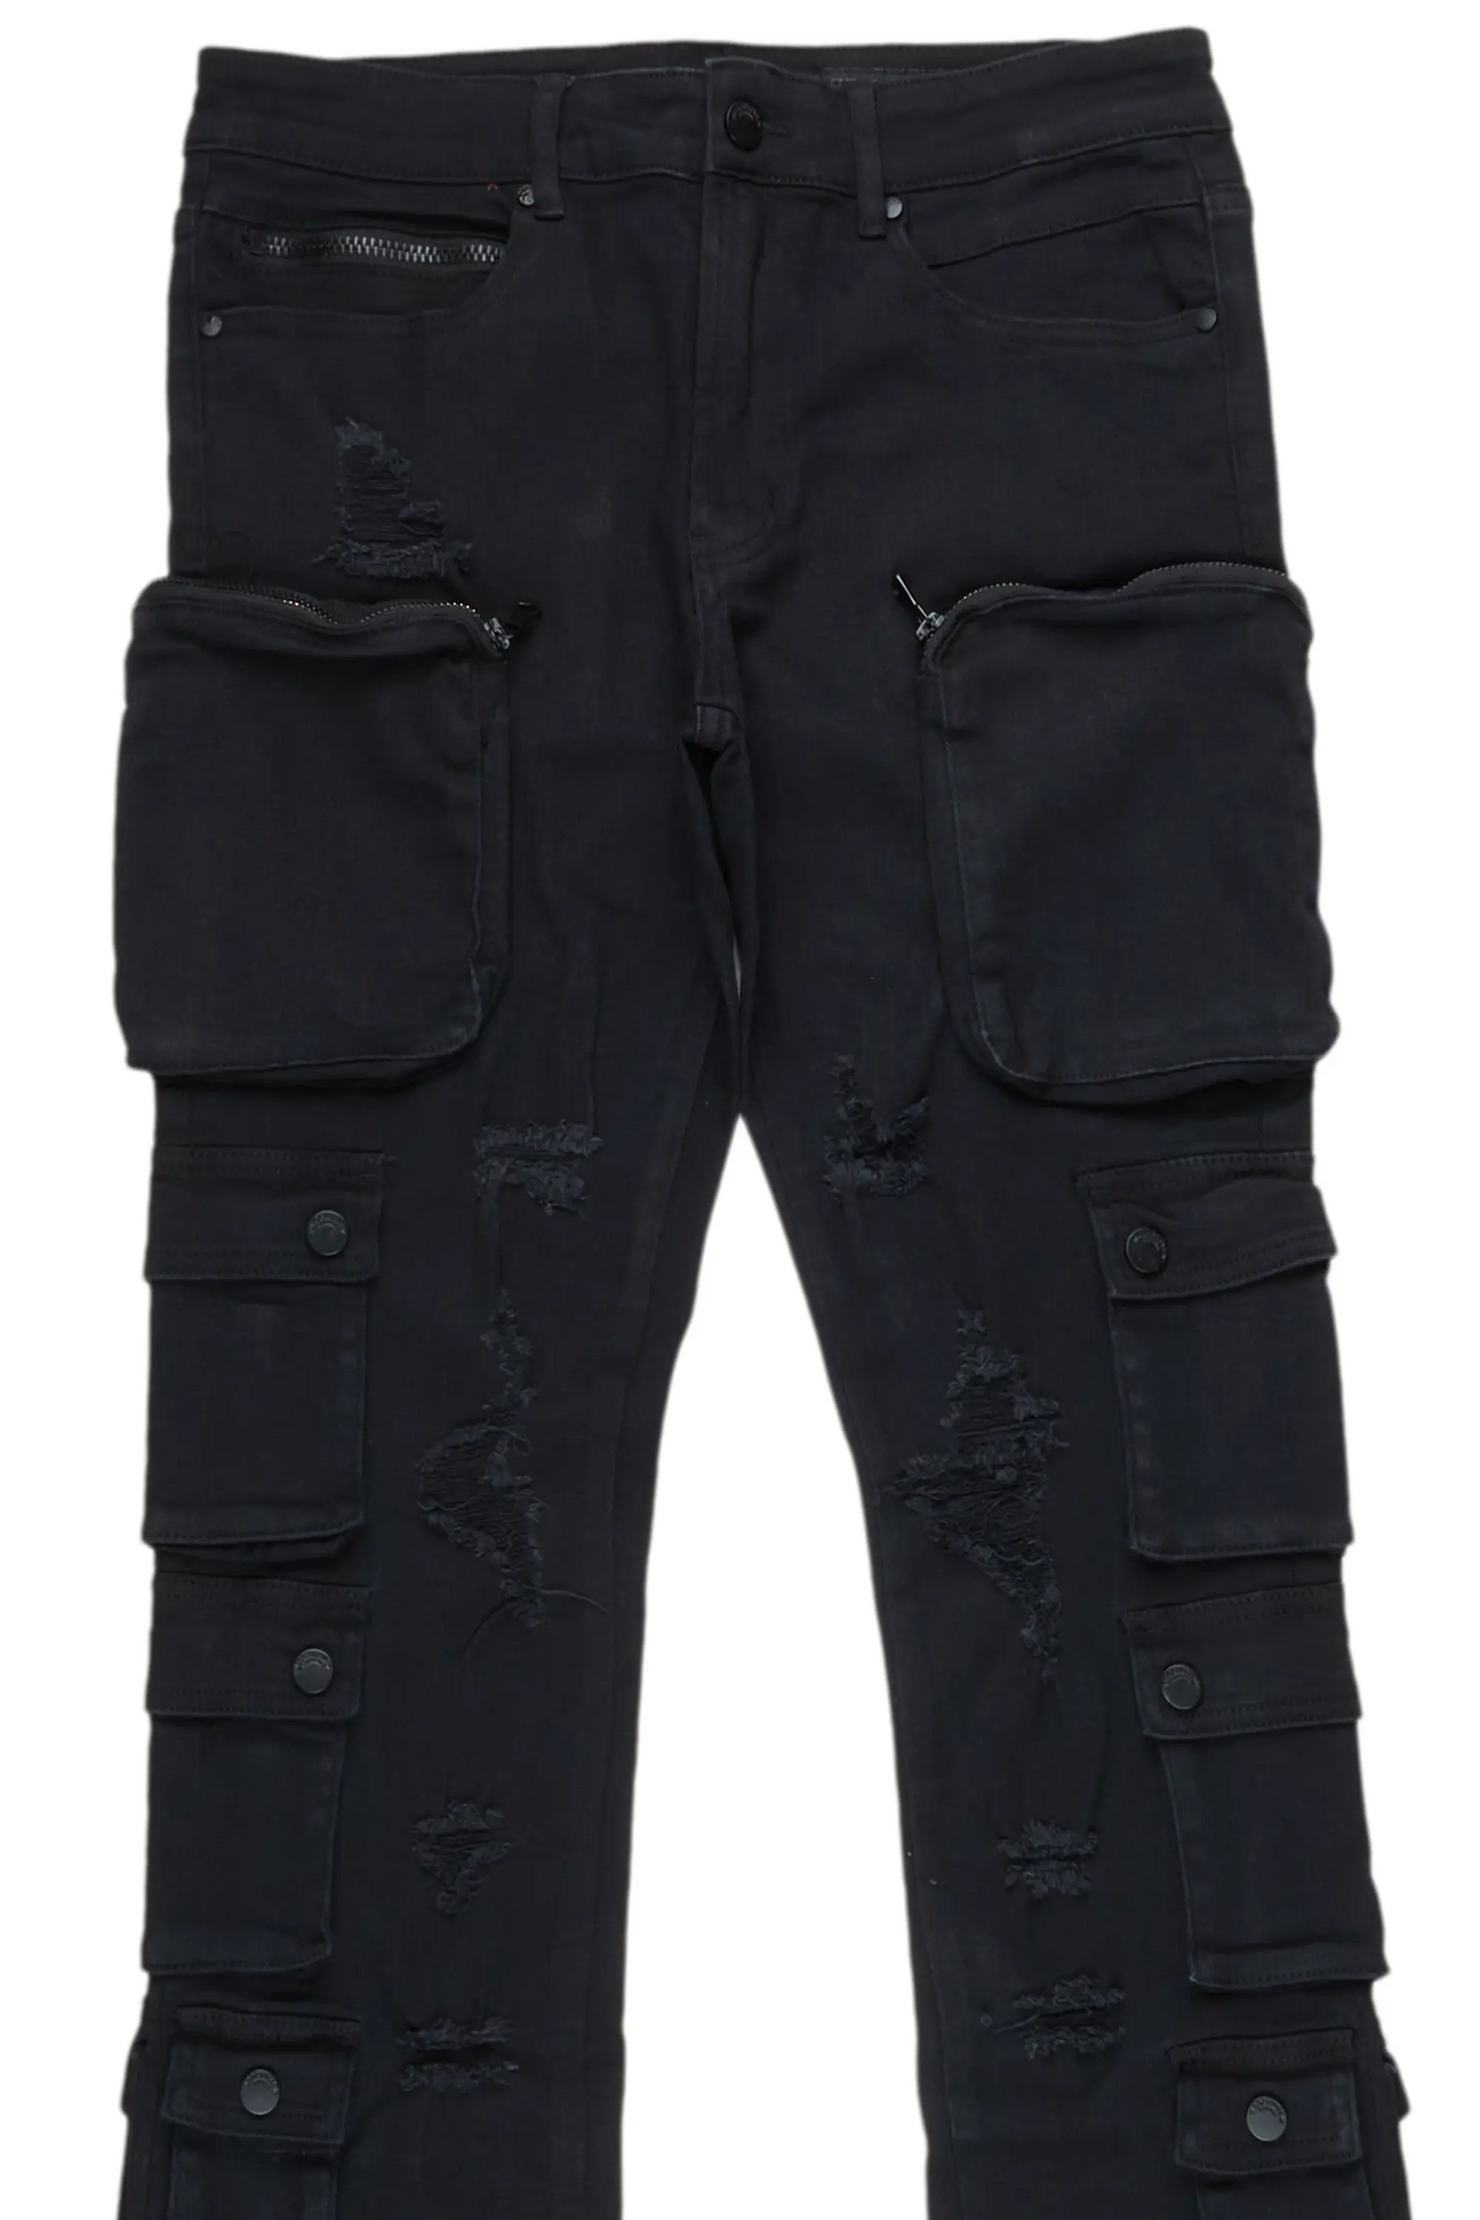 Konrad Black Cargo Stacked Flare Jean– Rockstar Original